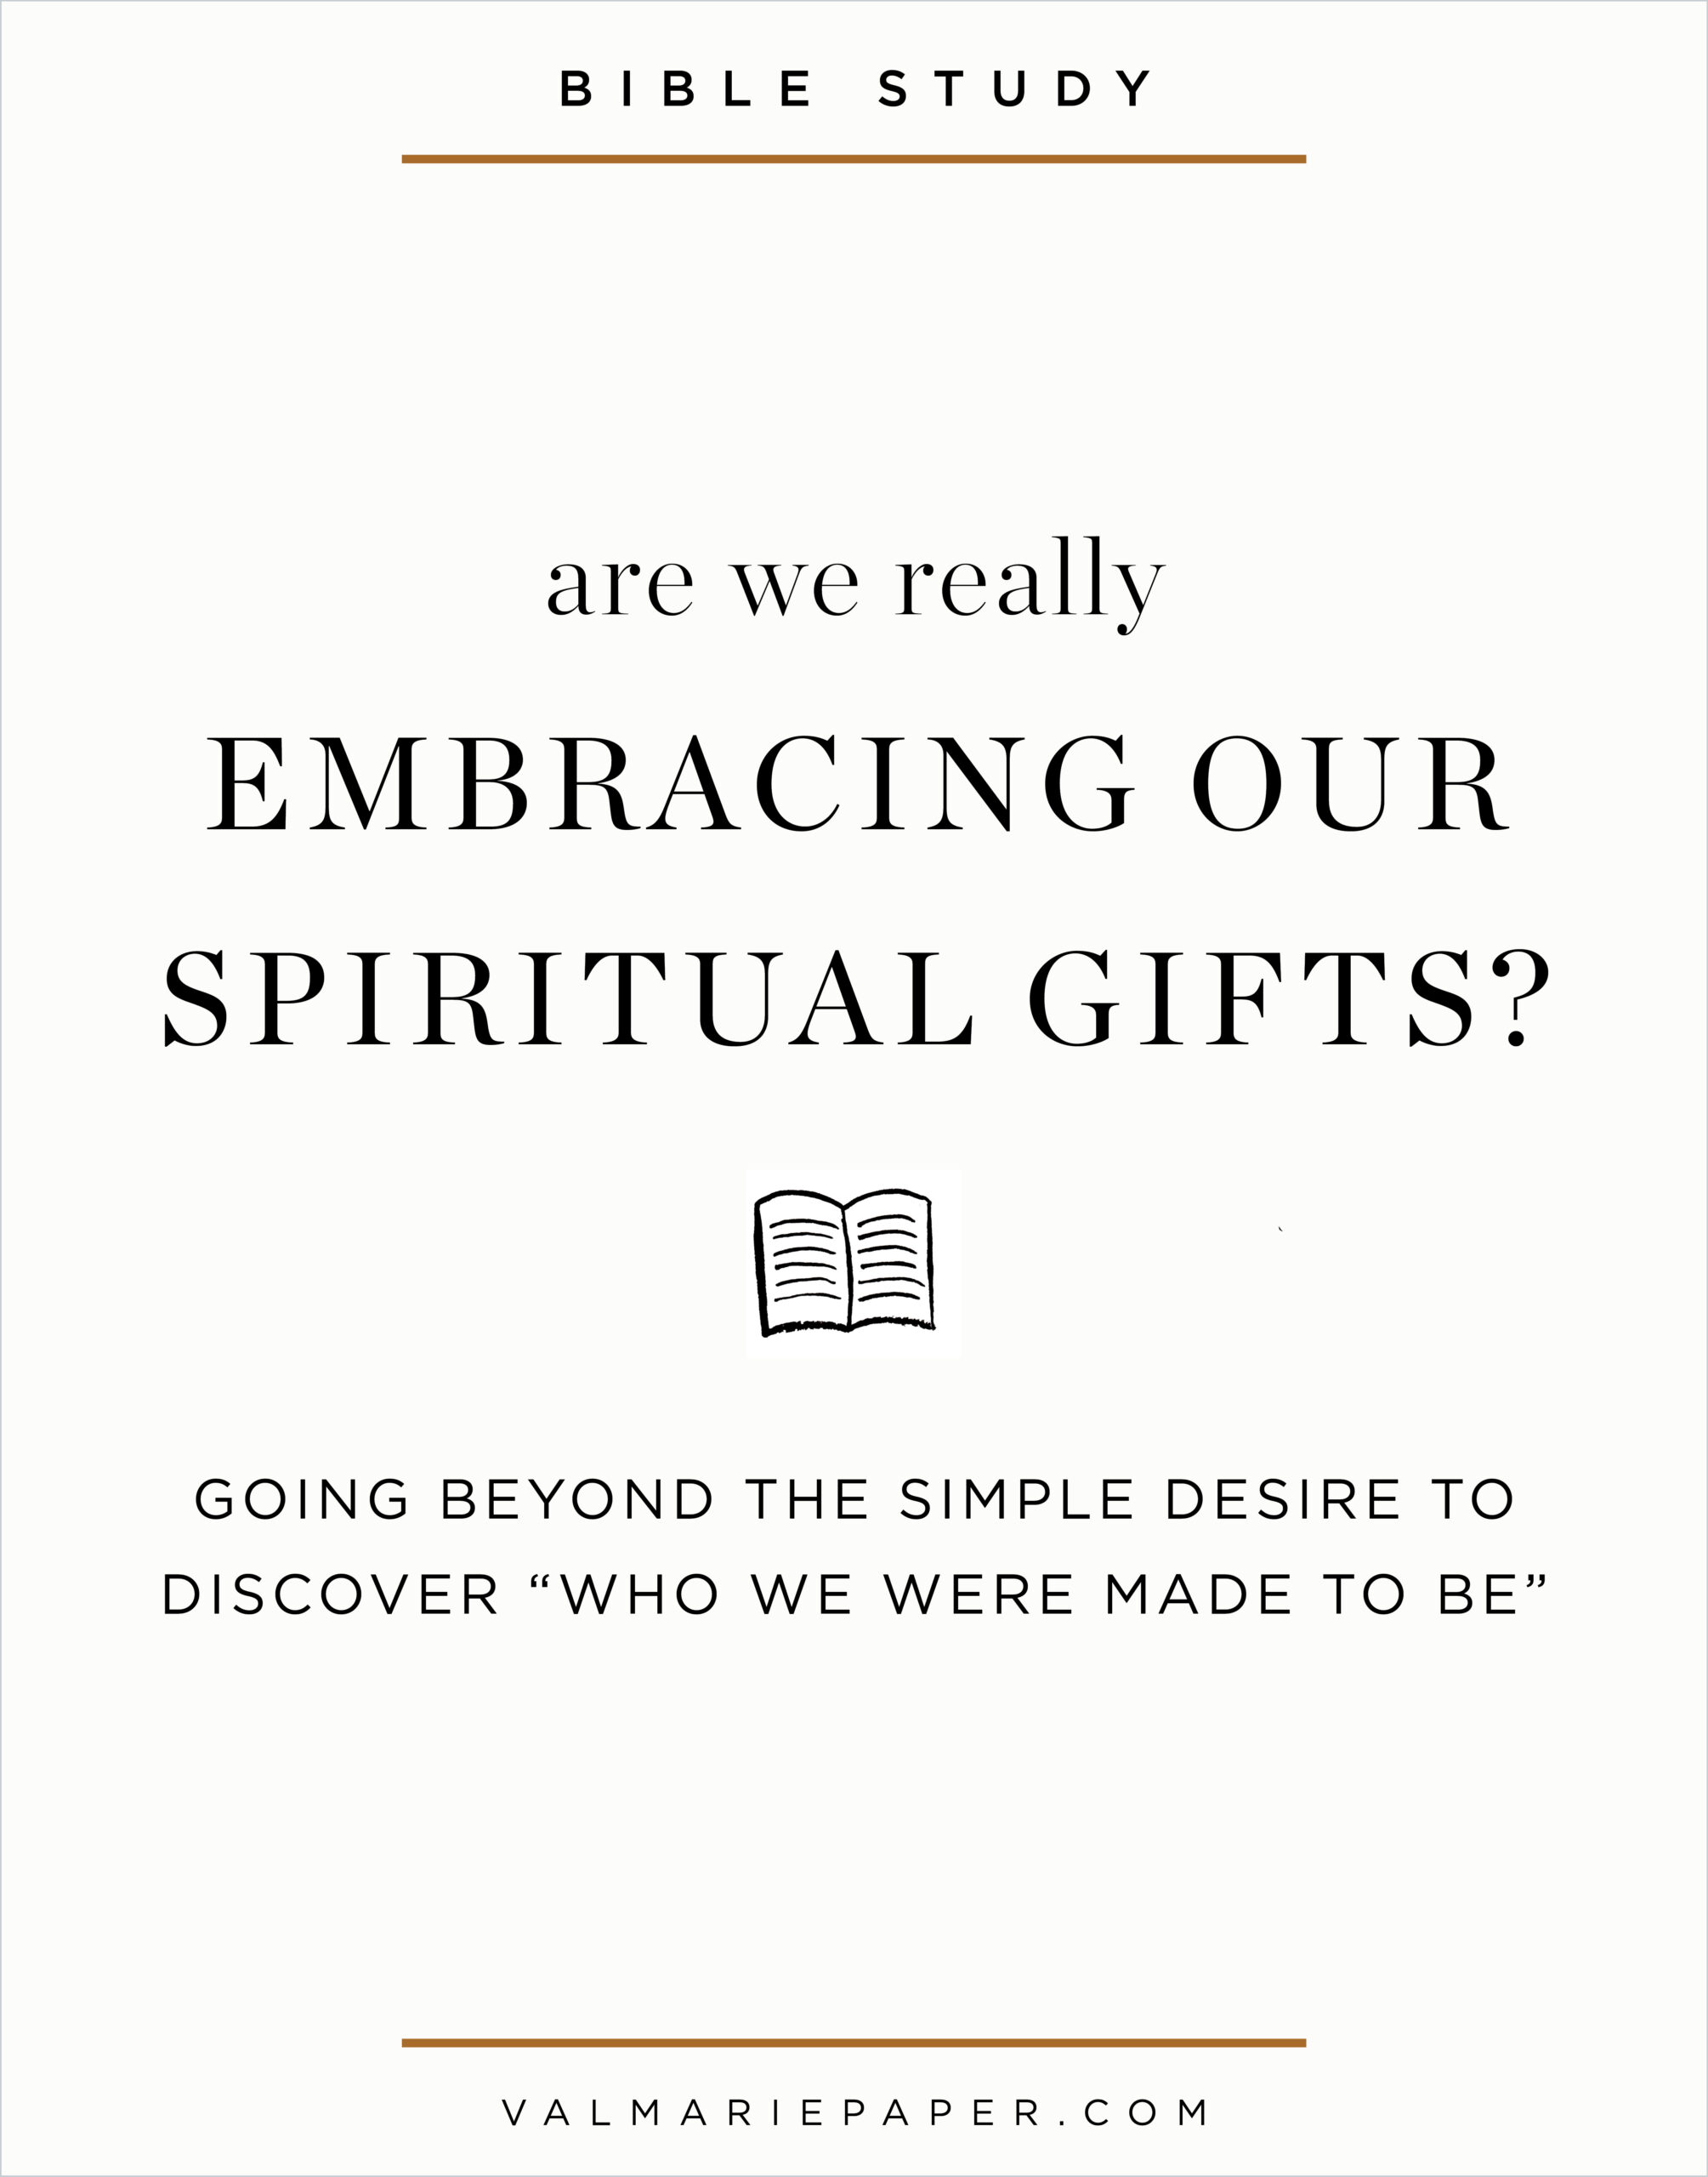 https://www.valmariepaper.com/wp-content/uploads/2019/06/spiritual-gifts-blog-graphic-scaled.jpg